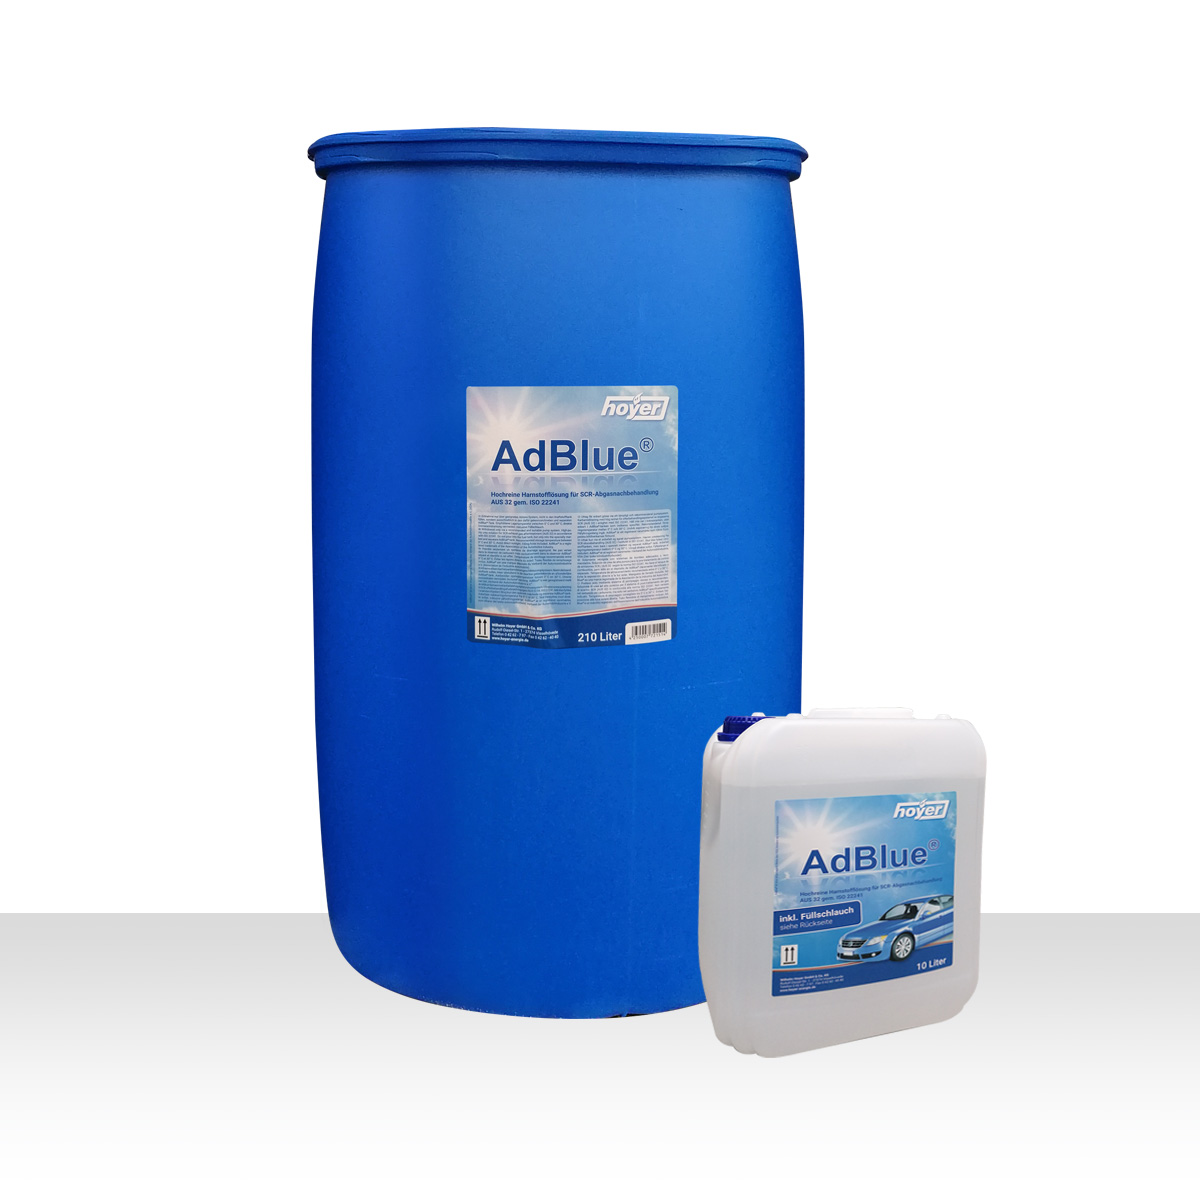 Hünersdorff Kanister für AdBlue blau 20 Liter